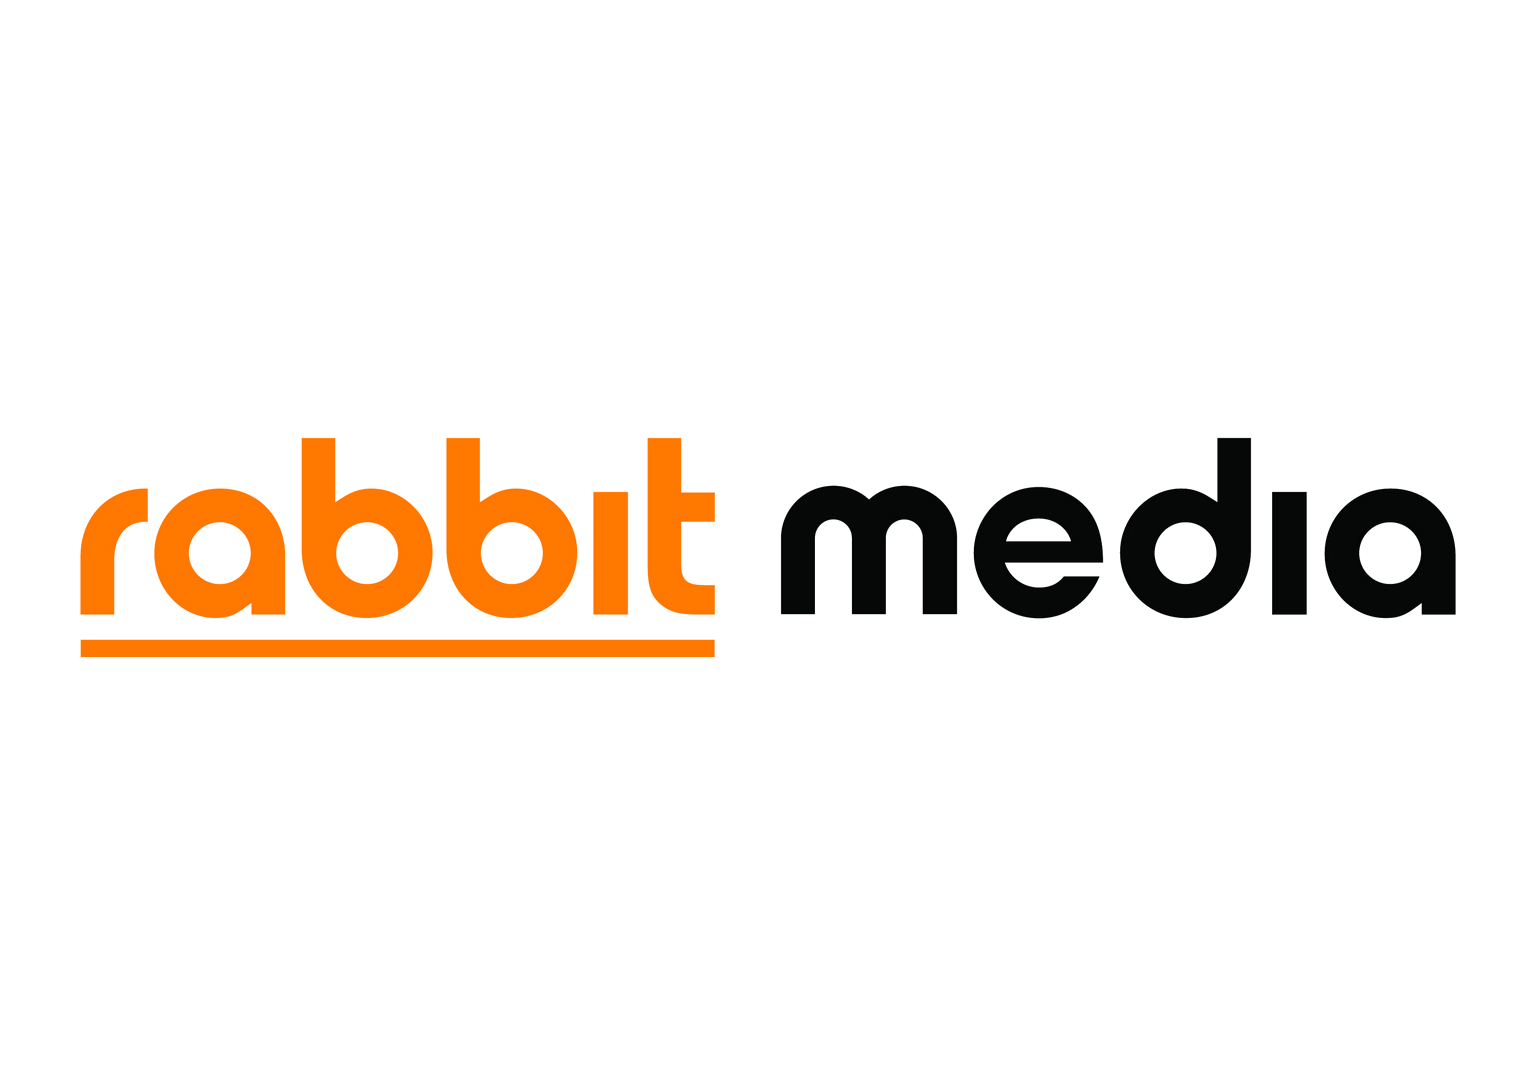 Rabbit Media สื่อนวัตกรรมใหม่ที่เข้าถึงกลุ่มเป้าหมายในยุคดิจิทัล